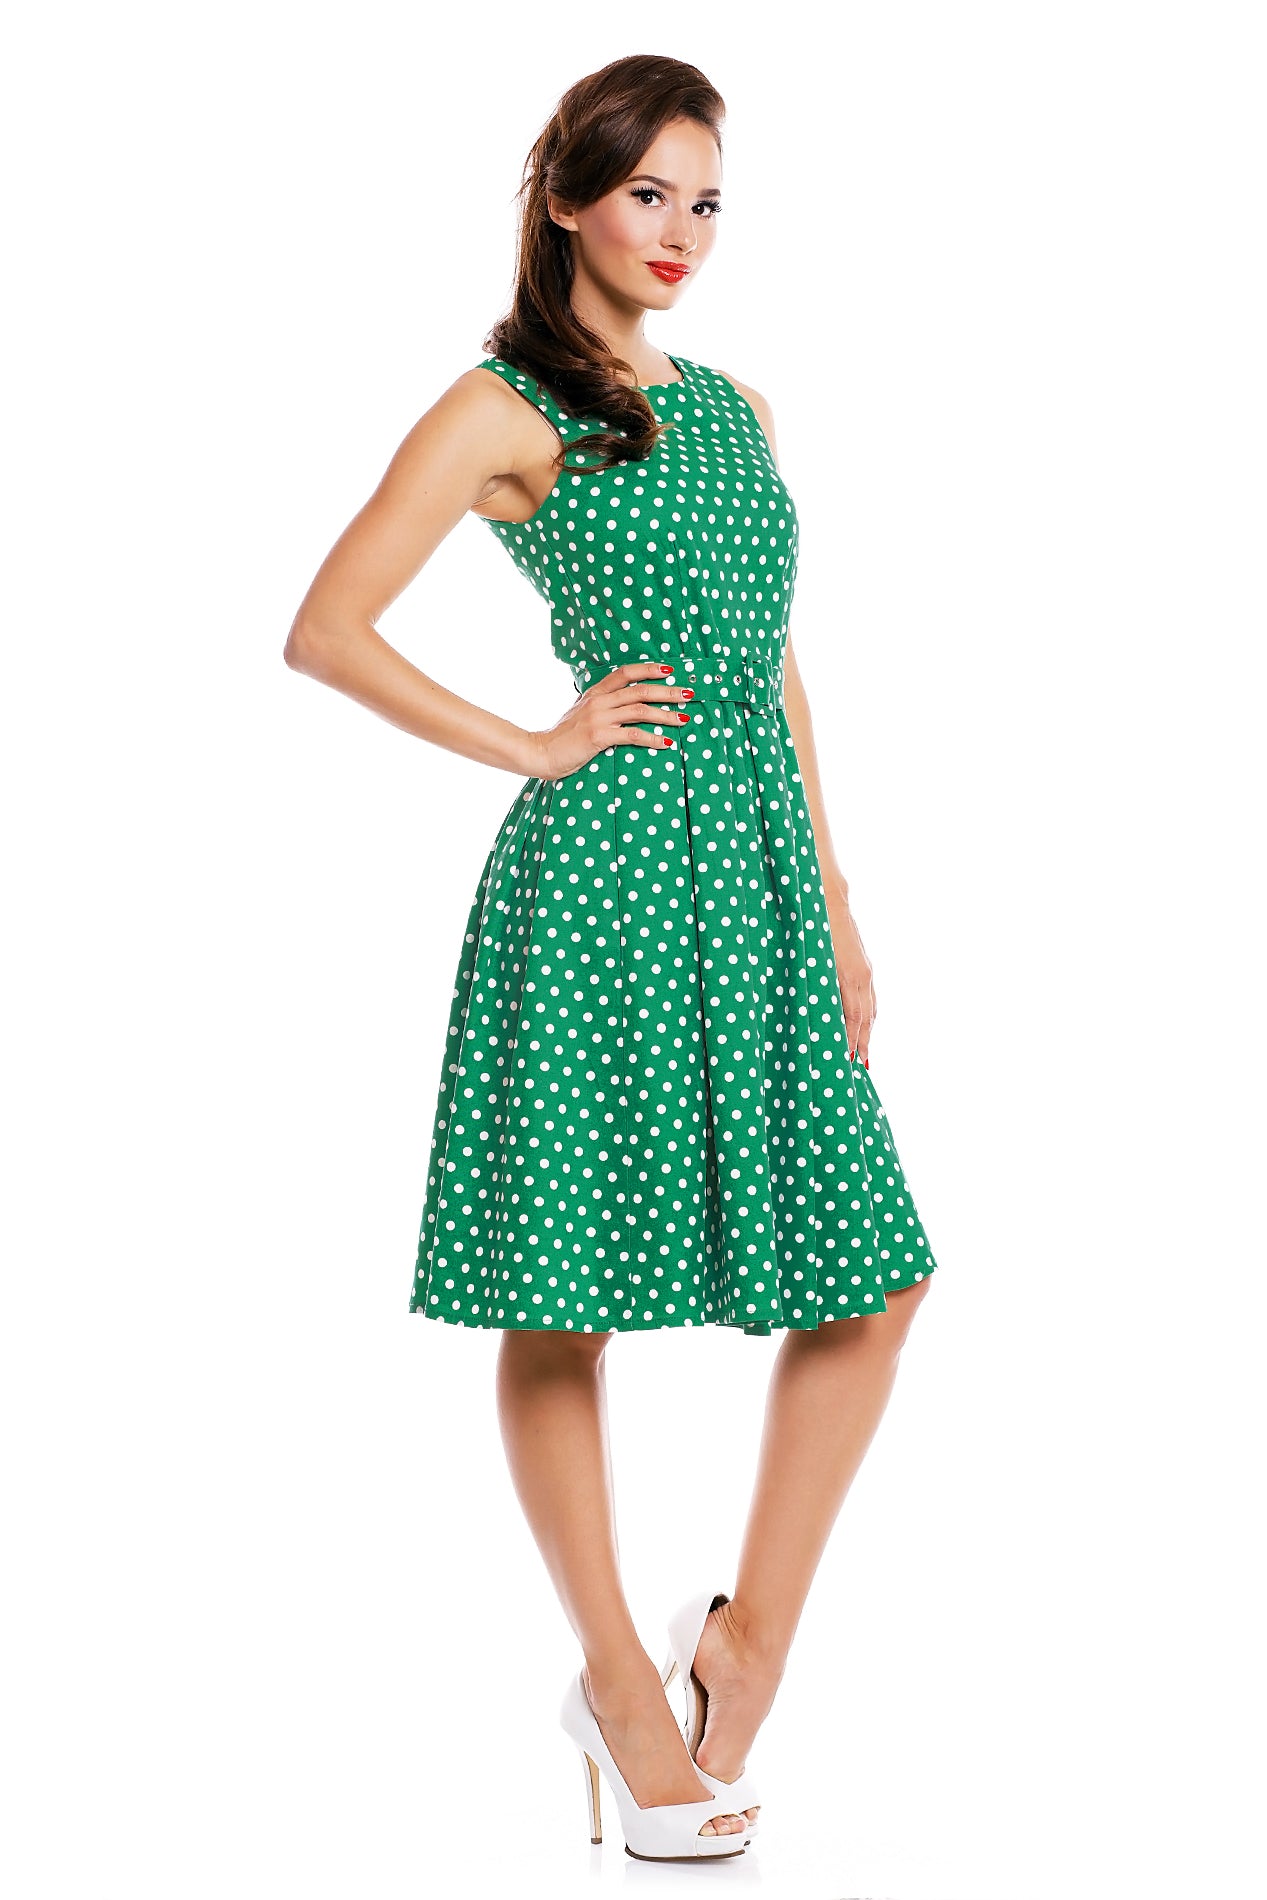 Lola Green Polka Dot Swing Dress